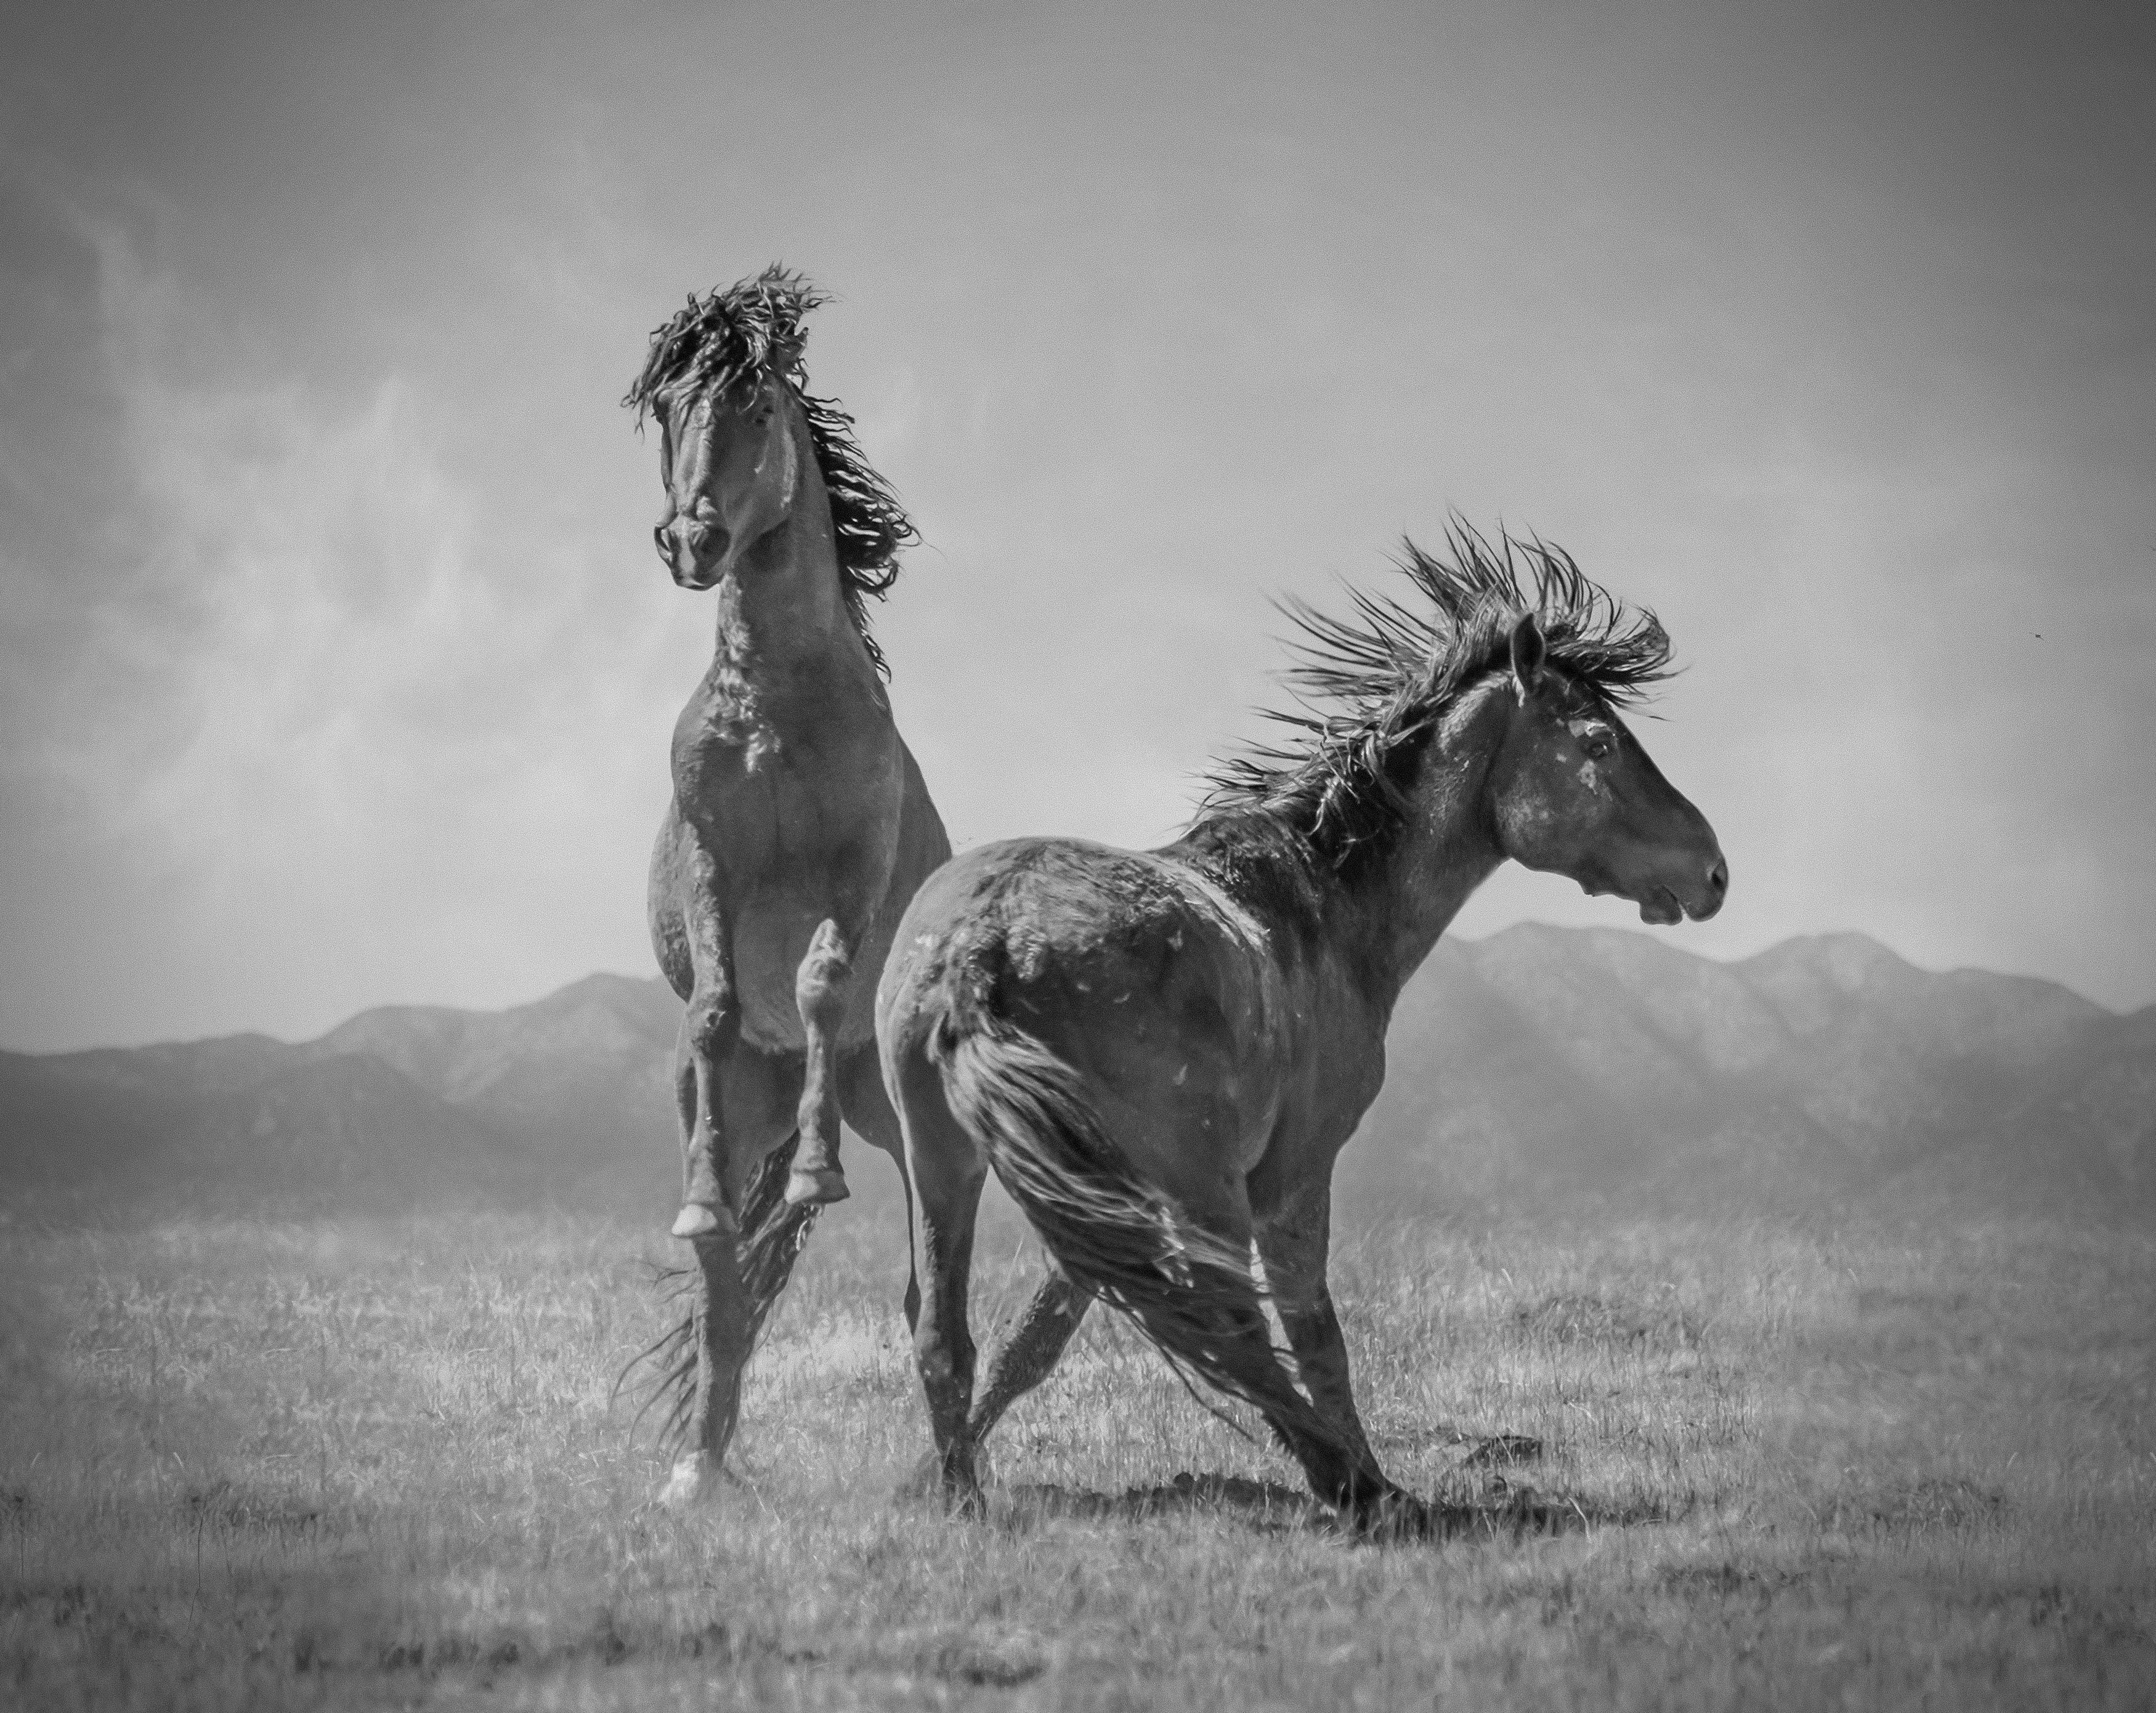 Shane Russeck Animal Print - "Wonder Horses" 28x40 - Black & White Photography, Wild Horses Mustangs 